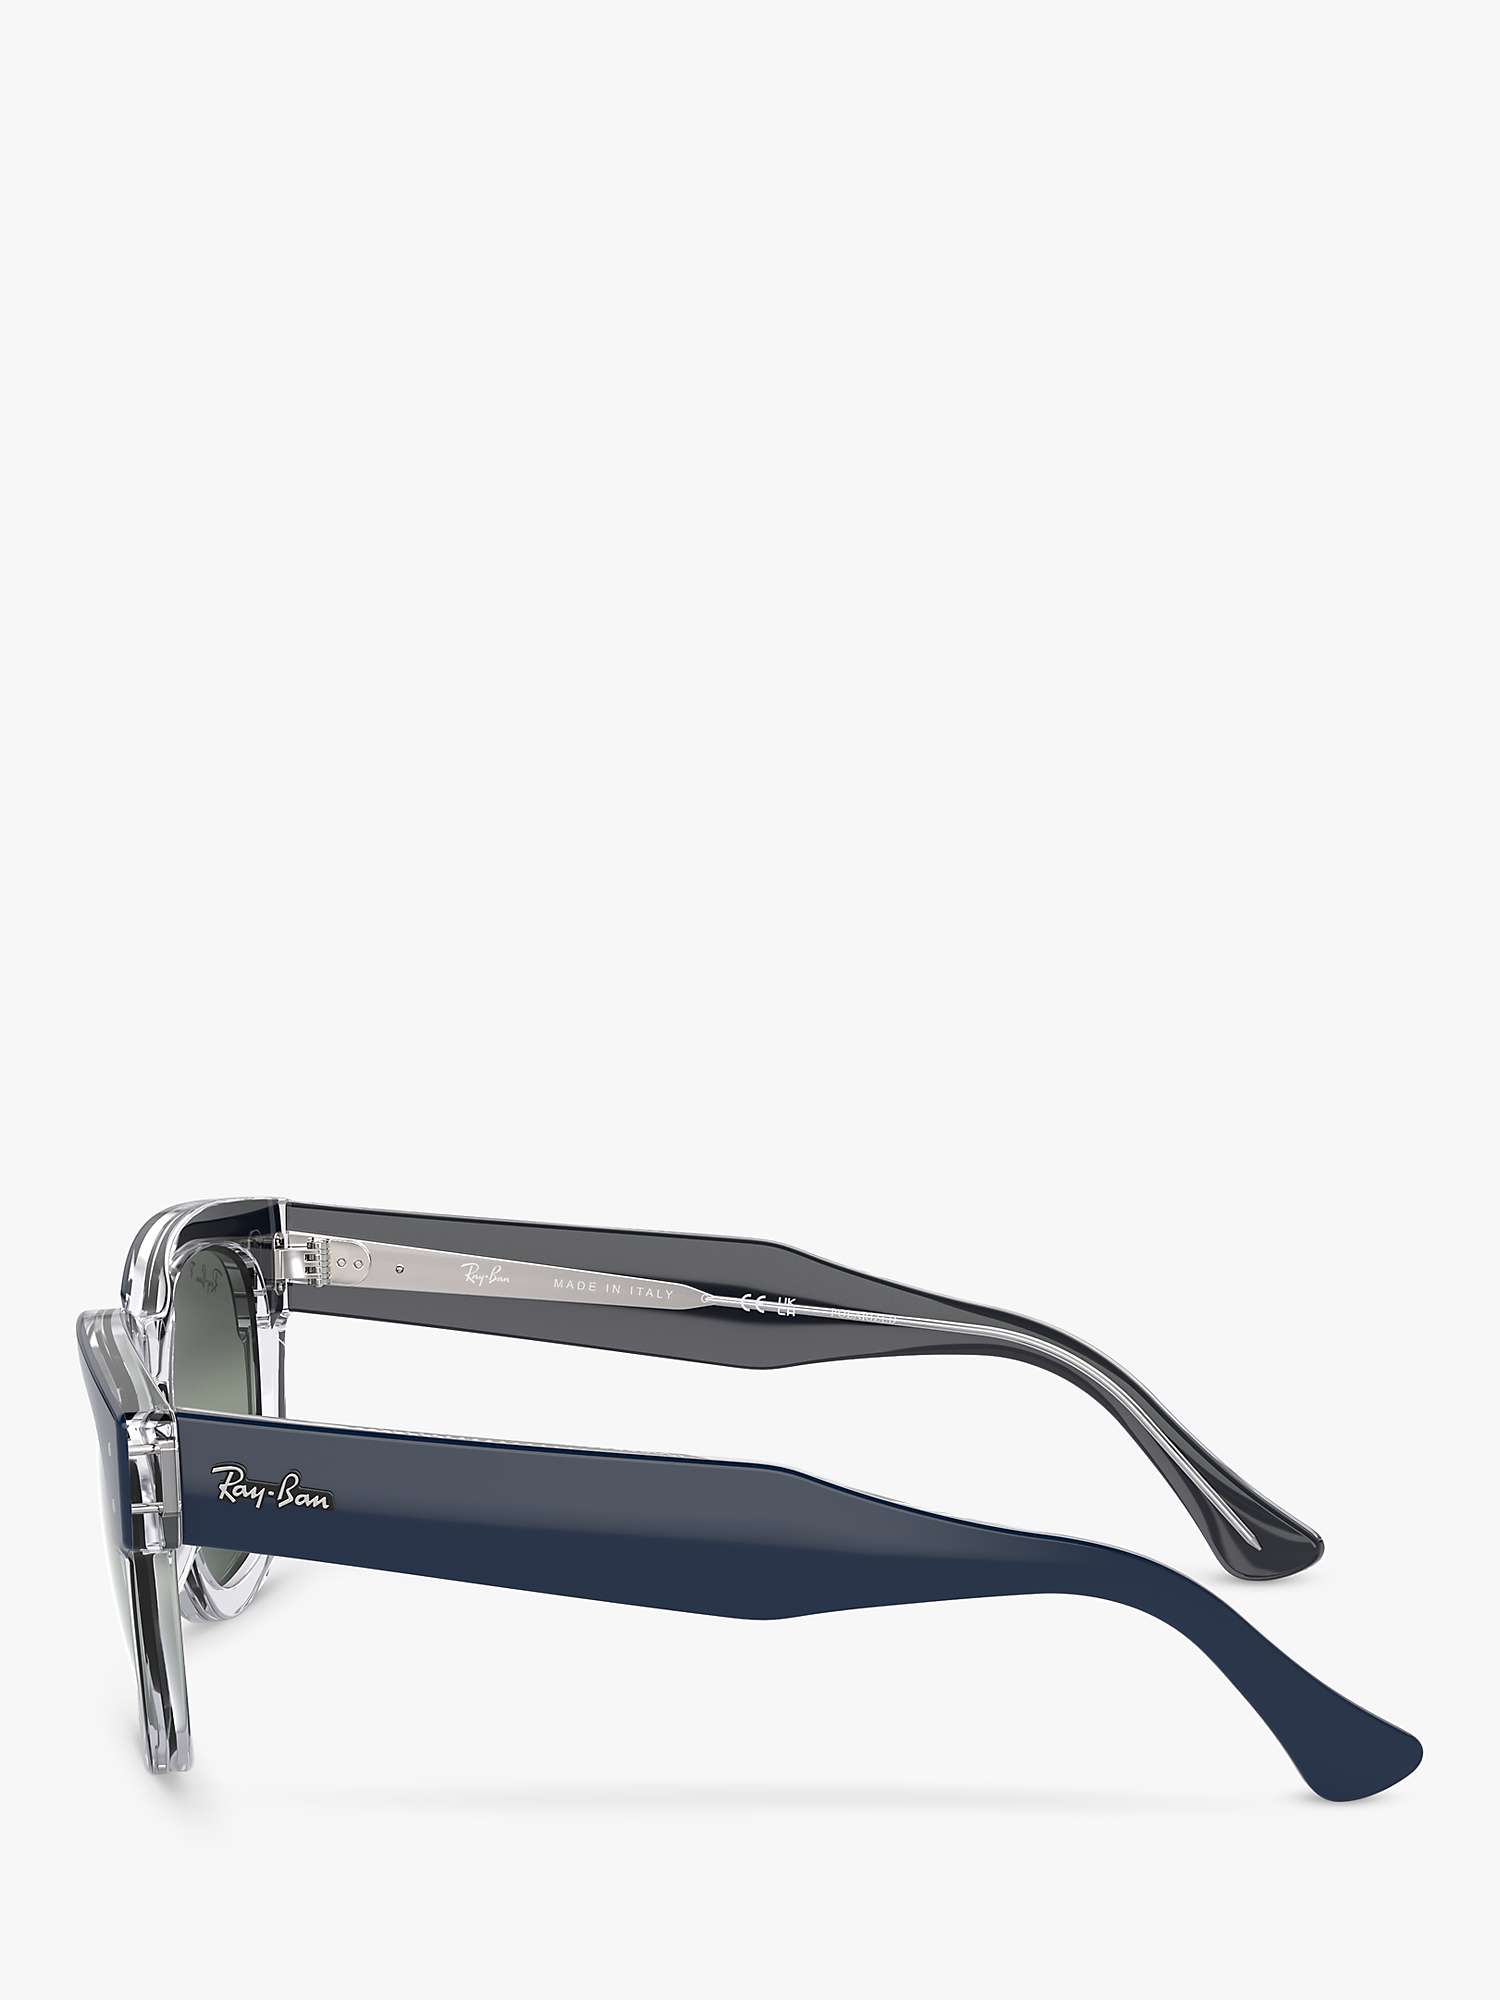 Buy Ray-Ban RB0298S Unisex Mega Hawkeye Sunglasses, Blue On Transparent Online at johnlewis.com